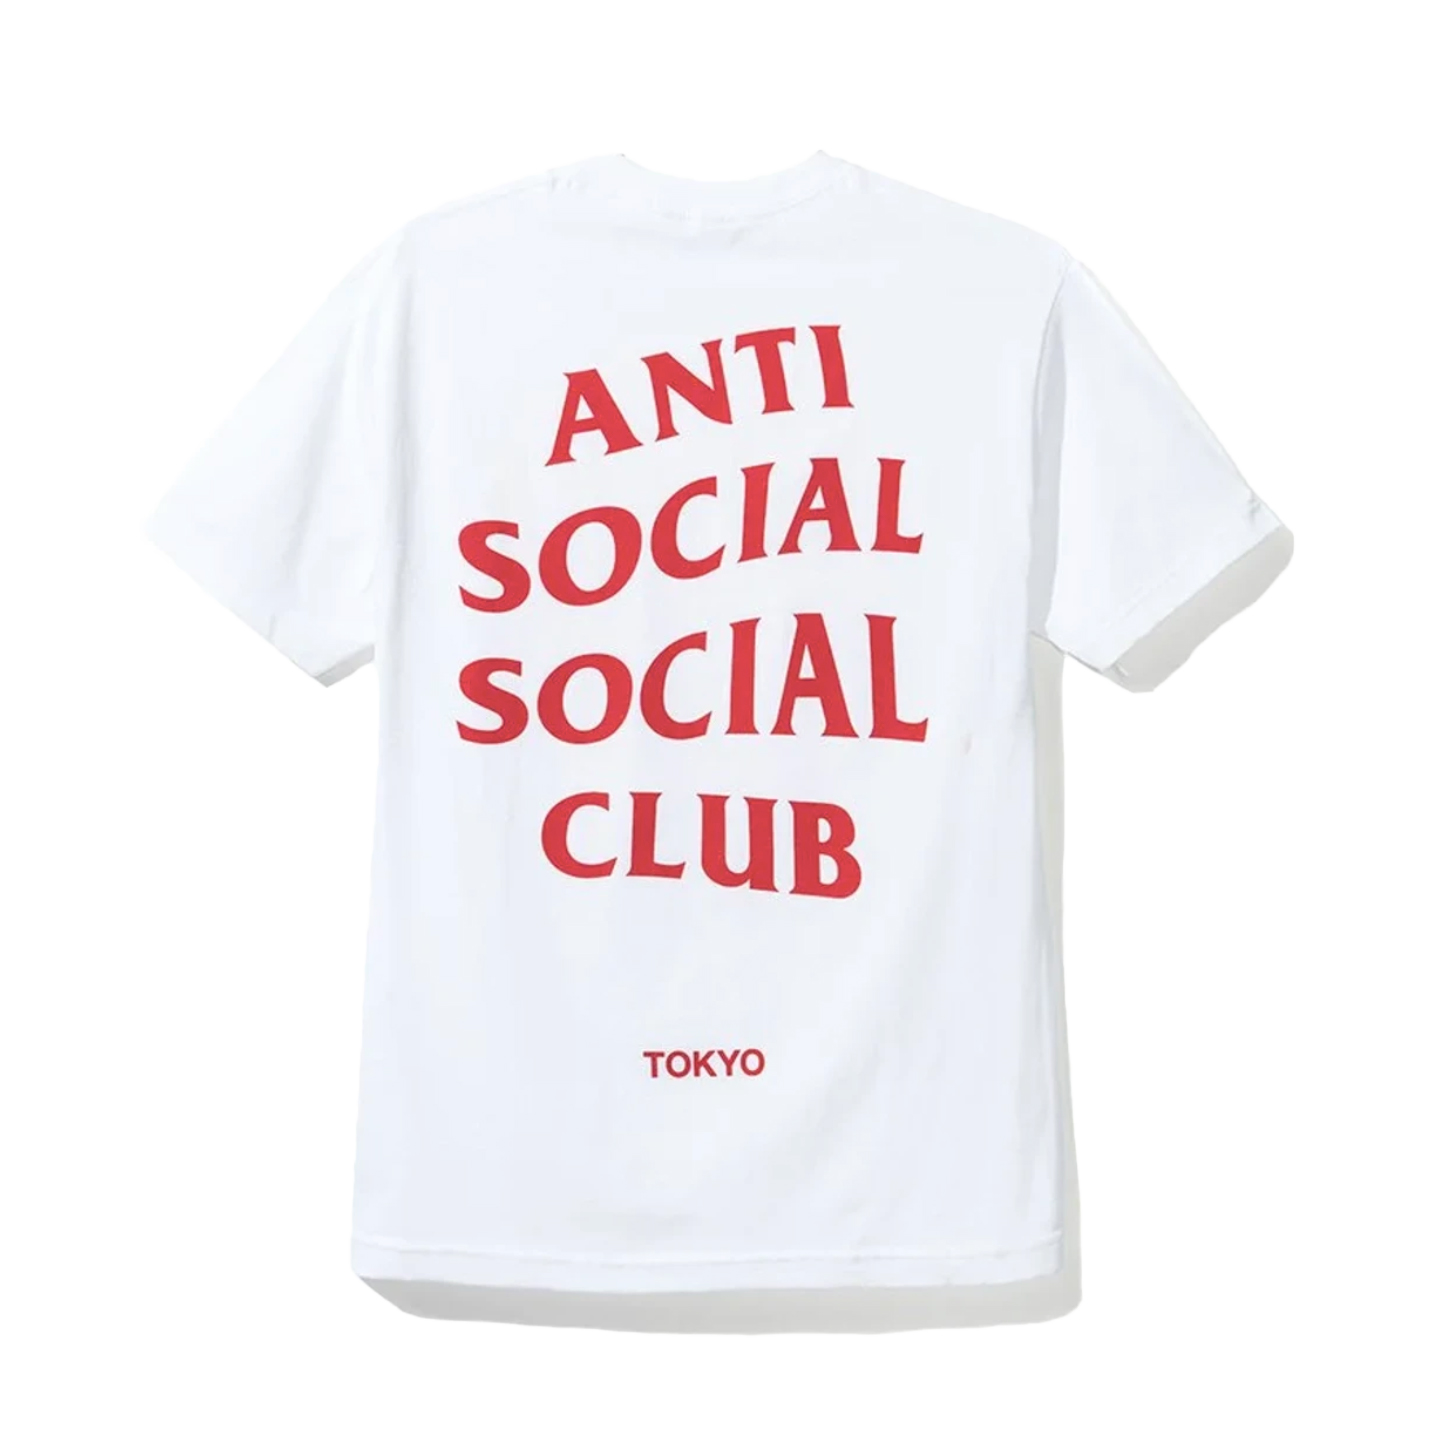 ANTI SOCIAL SOCIAL CLUB TOKYO Tee